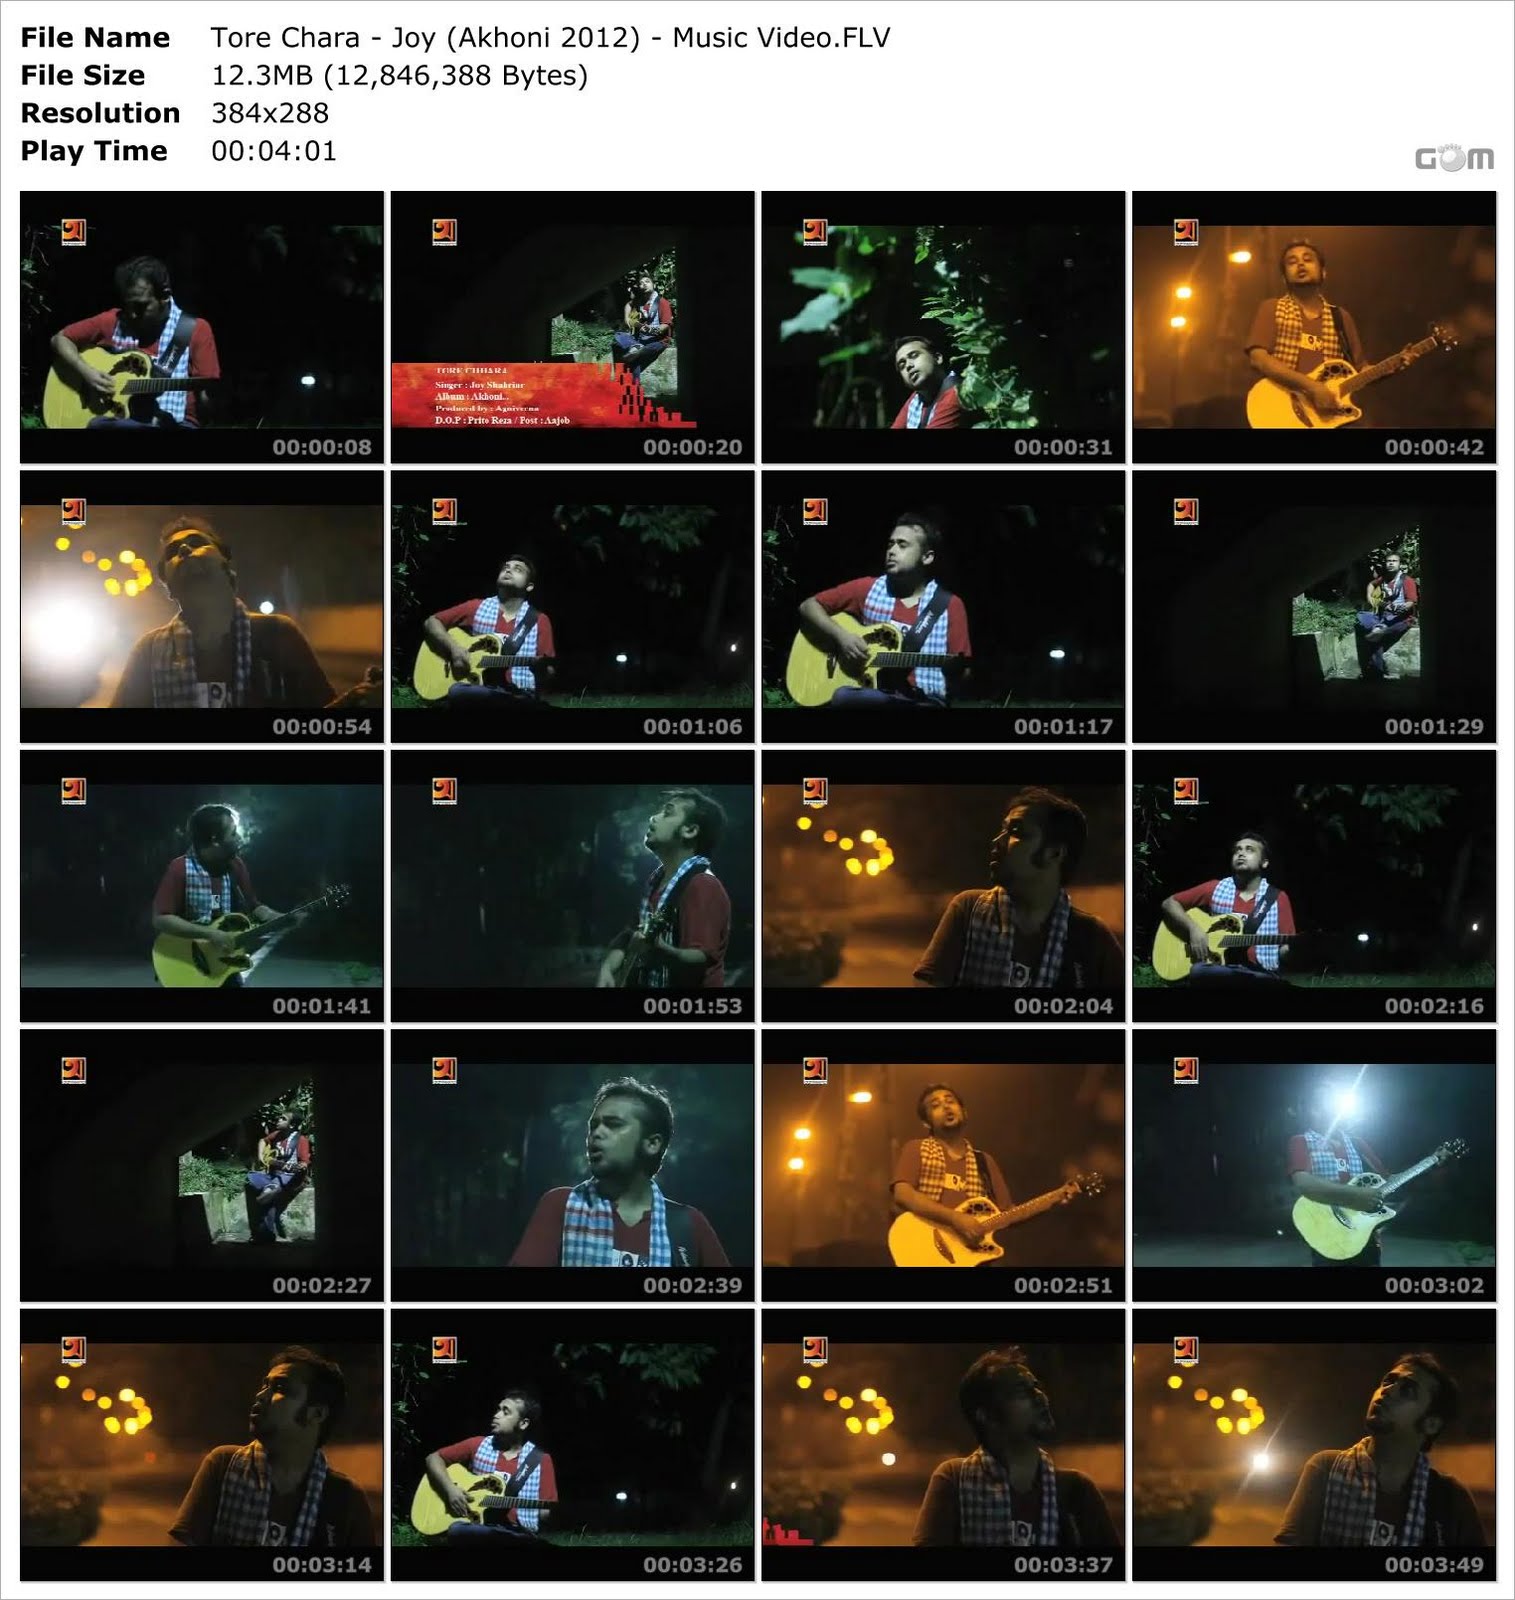 Tore Chara - Joy (Akhoni 2012) - Music Video Download